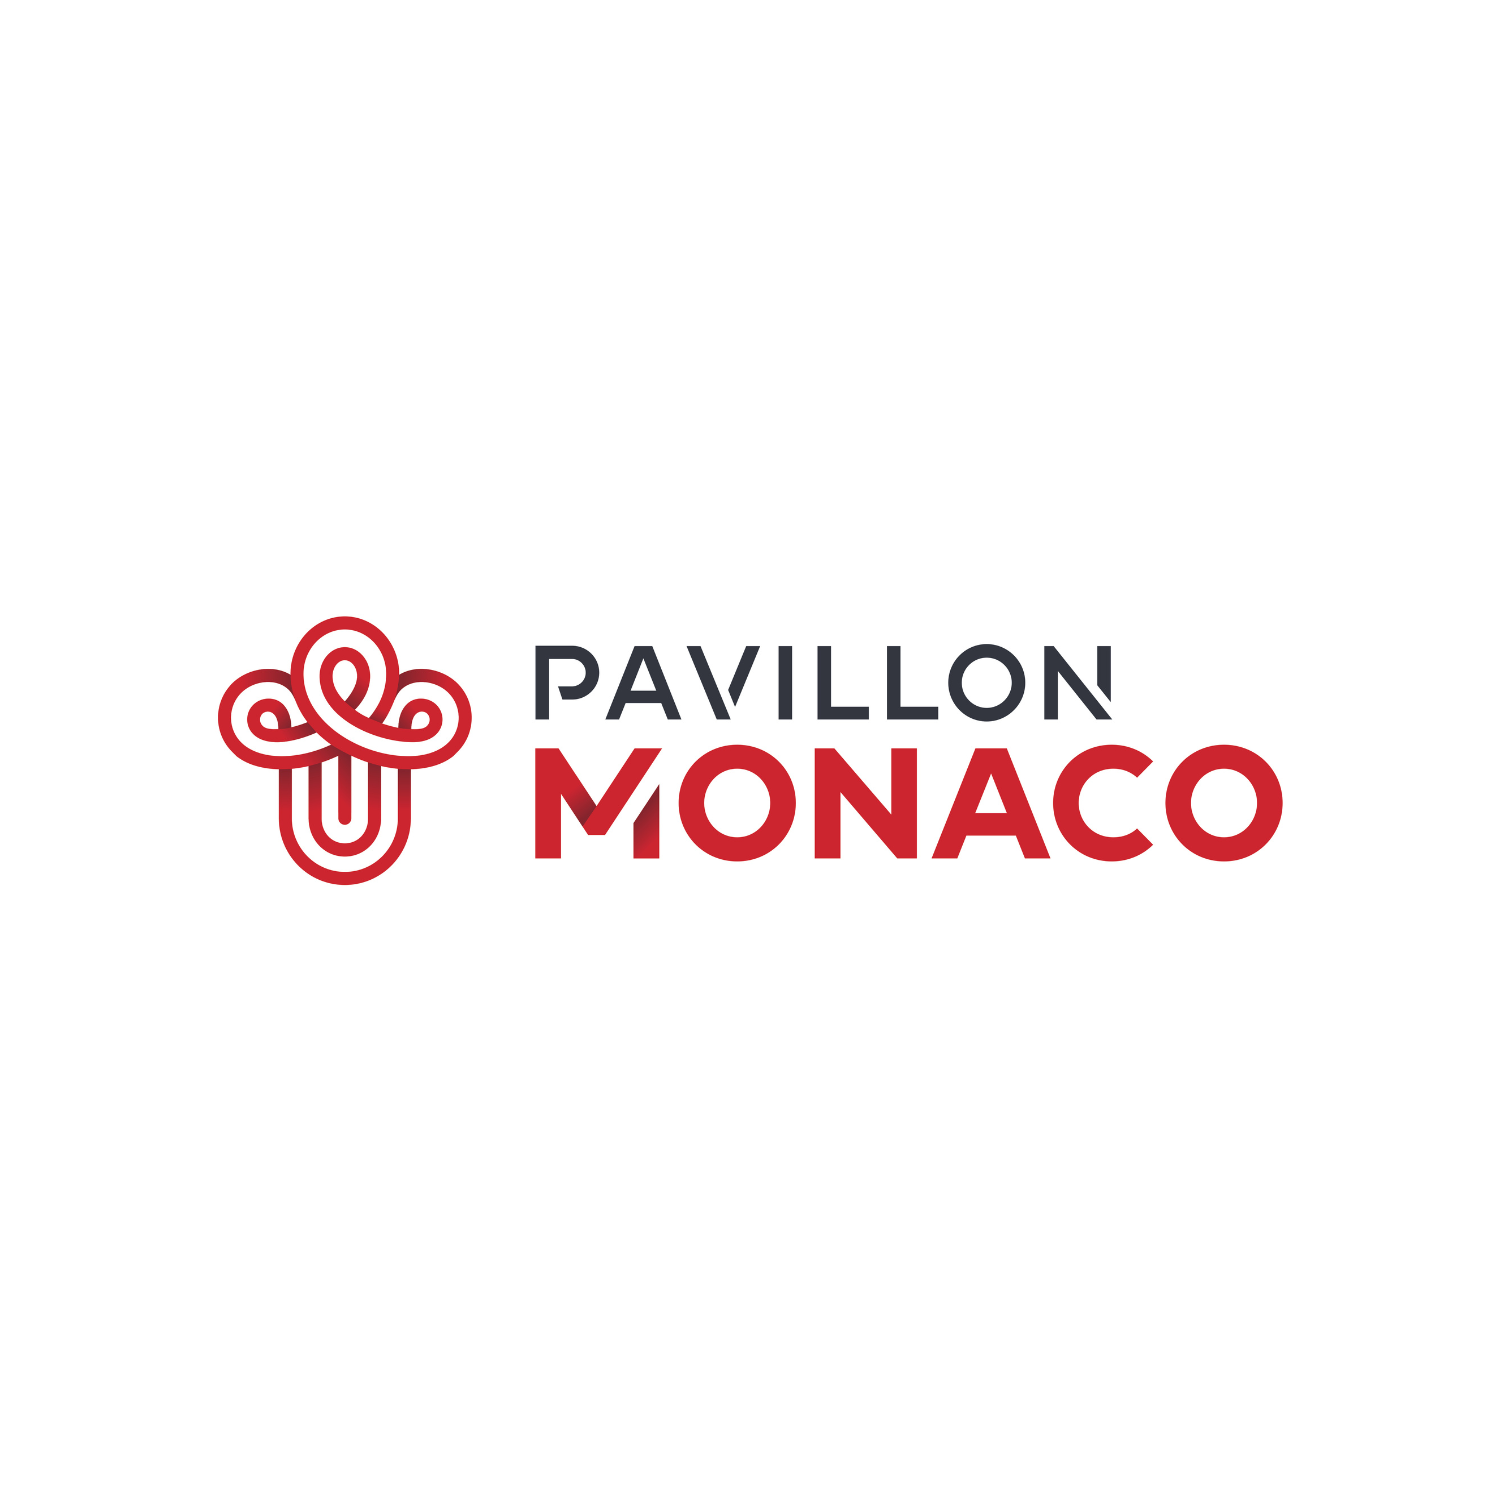 pavilion-monaco-carlo-app-comerciante-logo